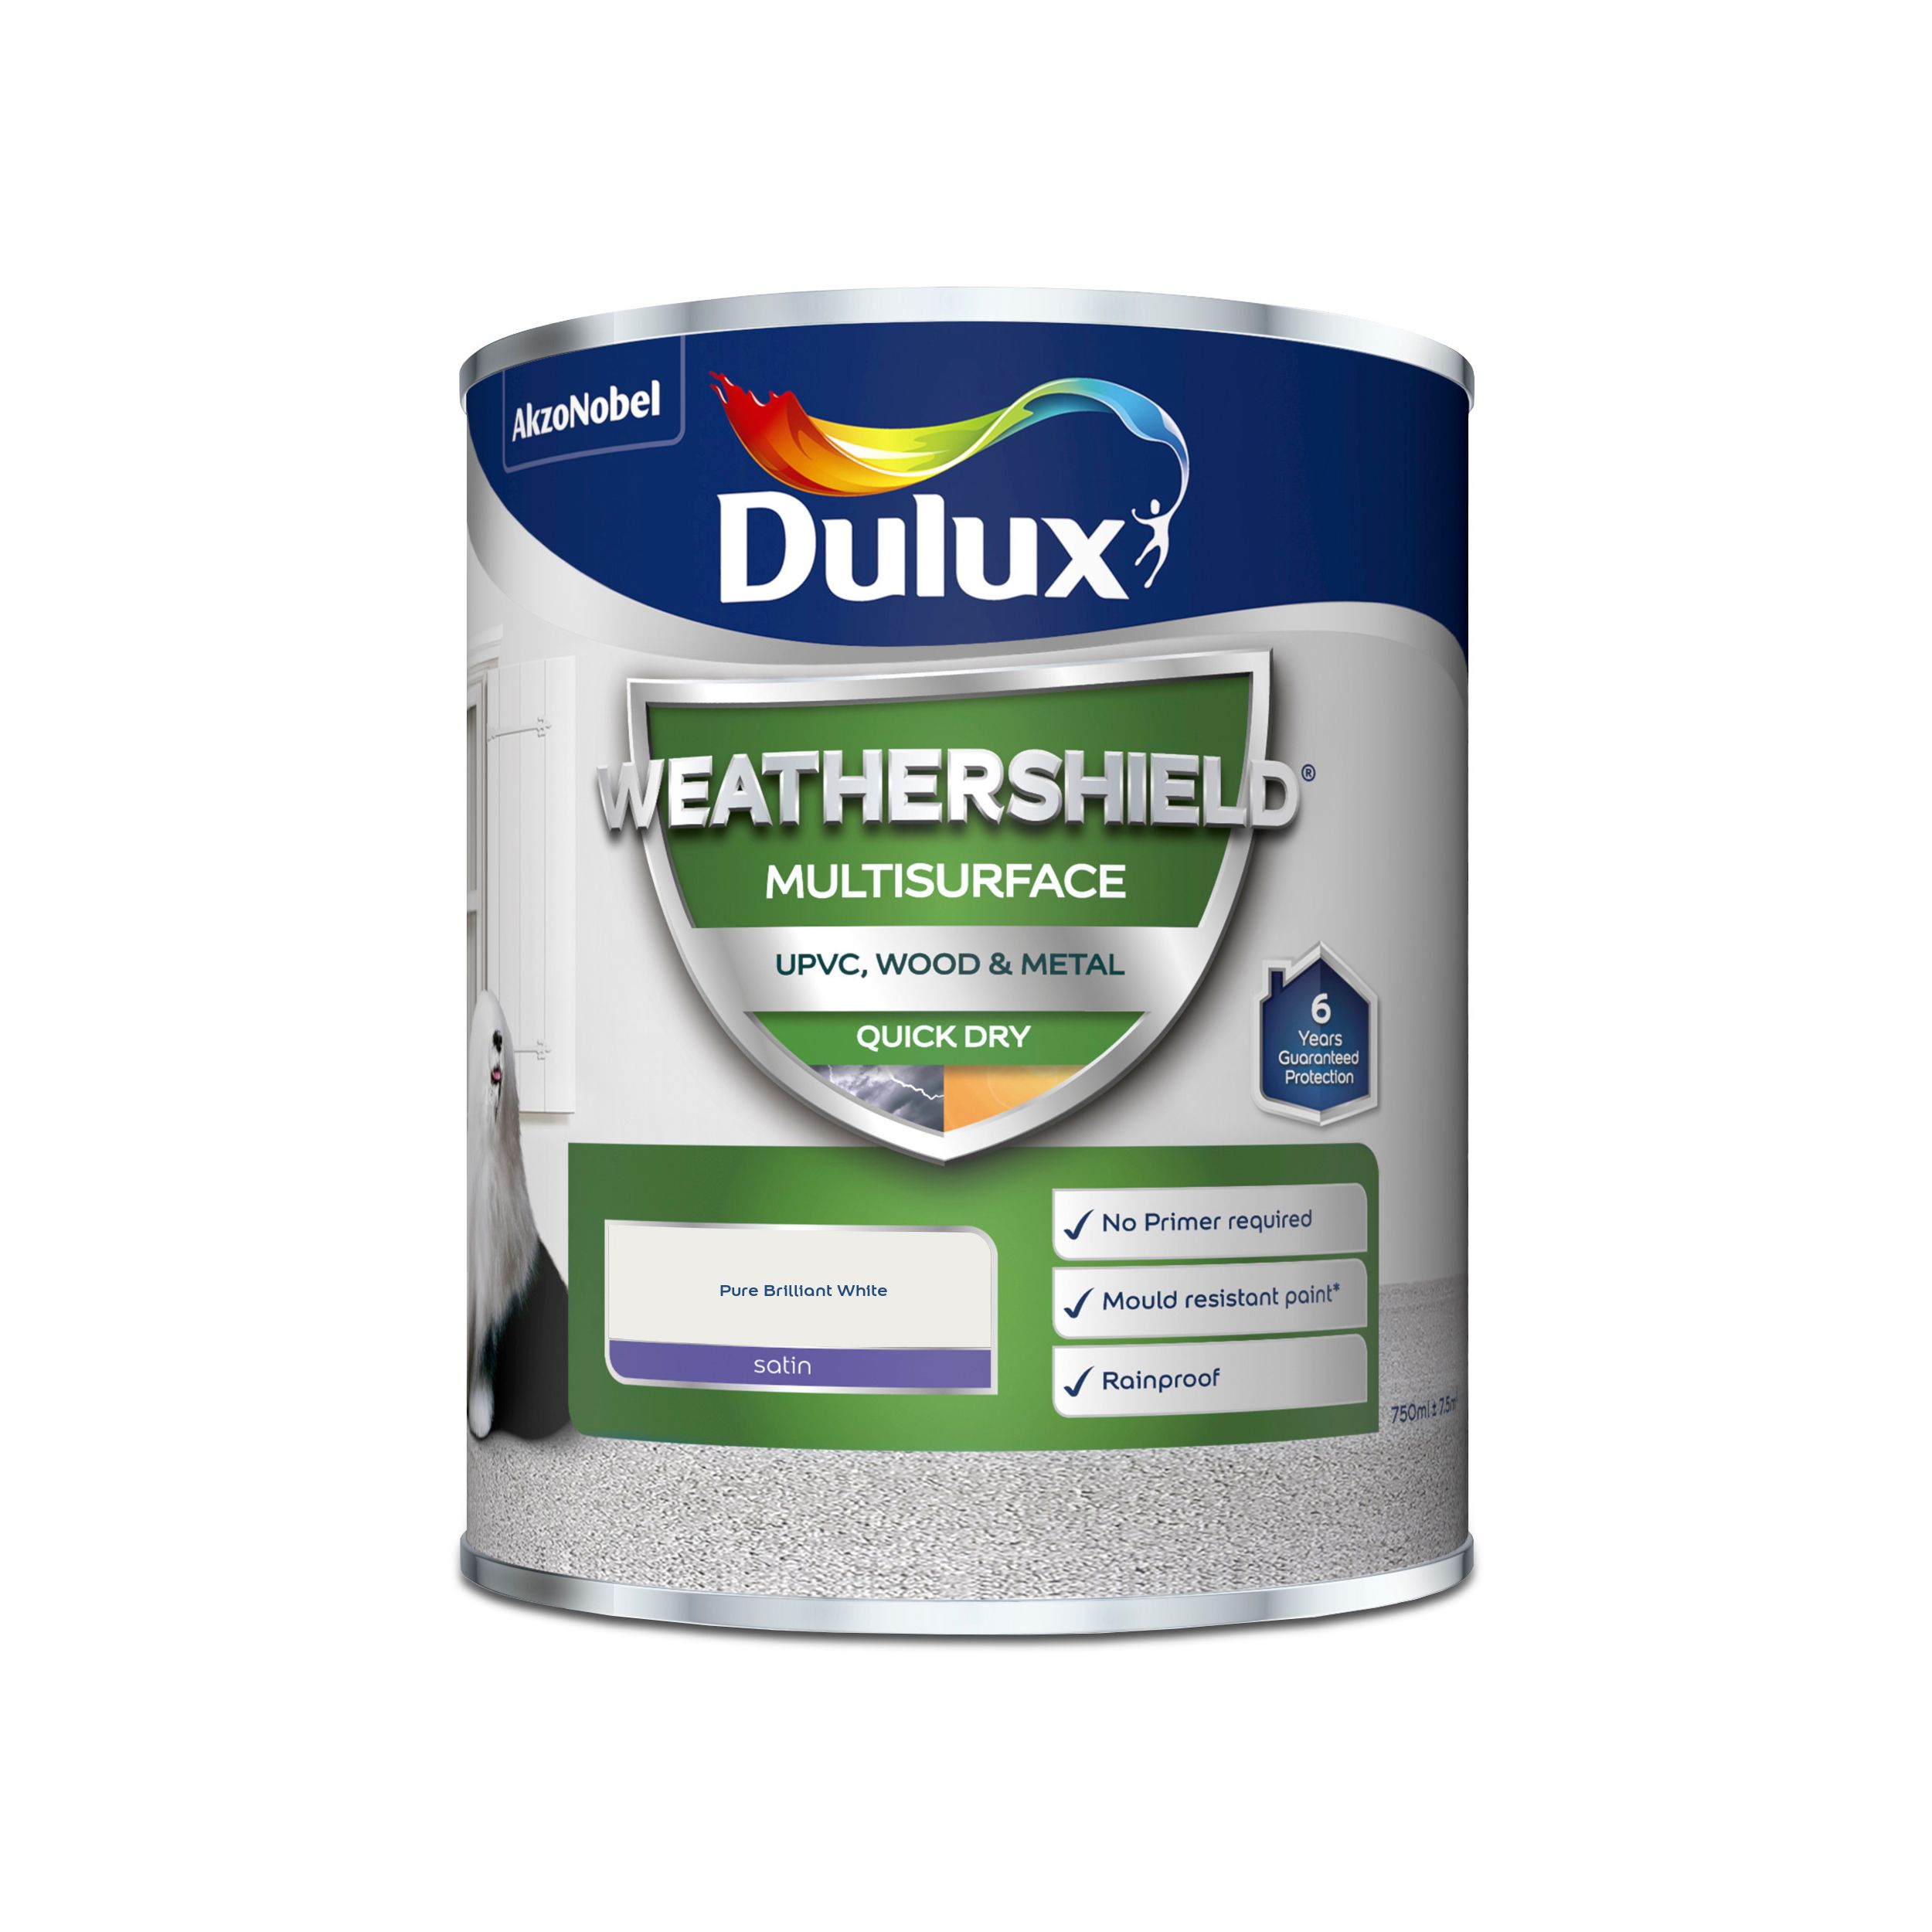 Dulux Weathershield Pure brilliant white Satinwood Multi-surface paint, 750ml